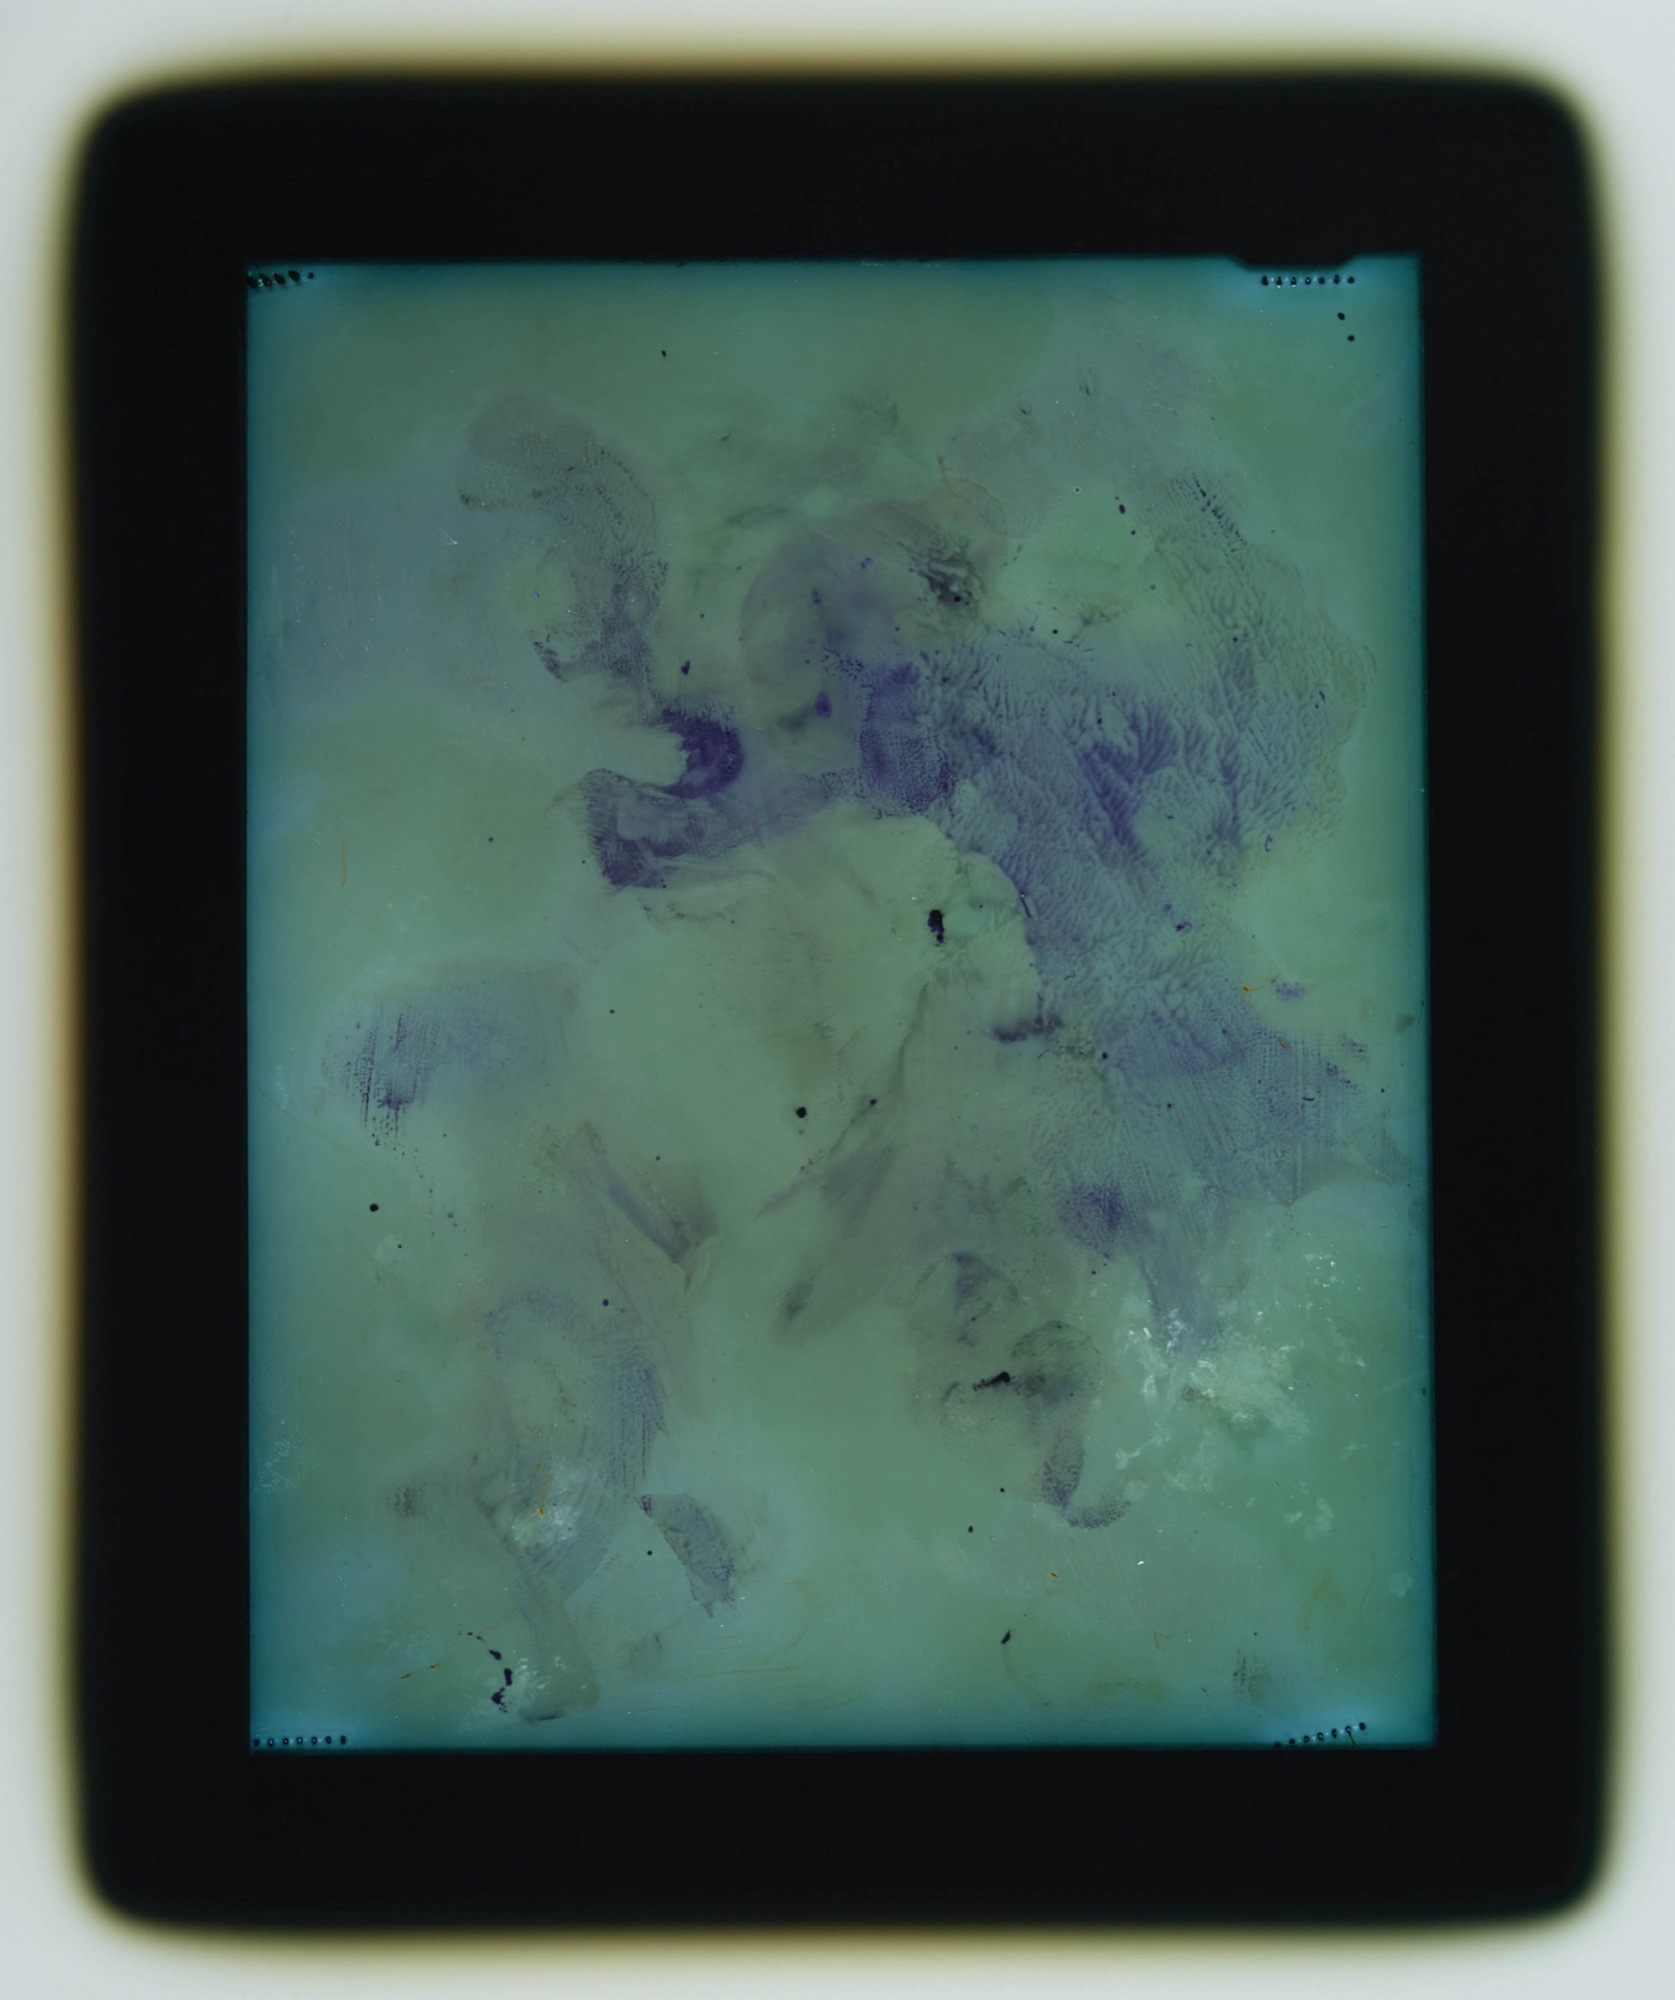 Justine Varga, <em>Influence</em> (2018-19), Chromogenic photograph, 97.5 x 76.8 cm (internal image) / 126 x 106 cm (image including halo border) / 131.5 x 110 cm (frame size). Edition of 5 + 2 AP. Image credit: Tolarno Galleries.